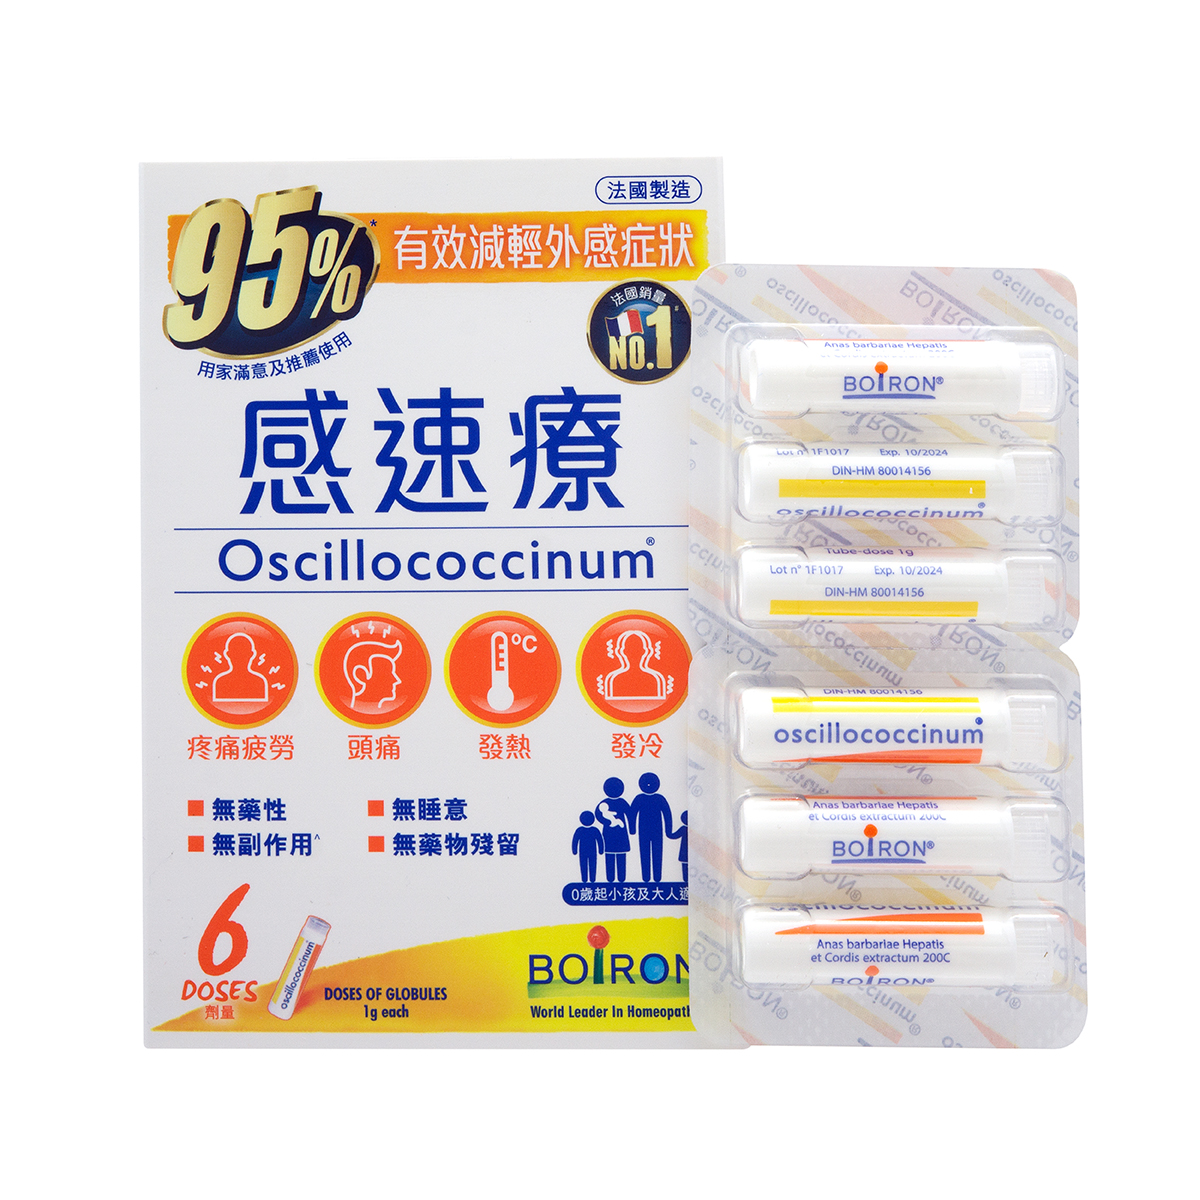 Oscillococcinum® (6 doses)